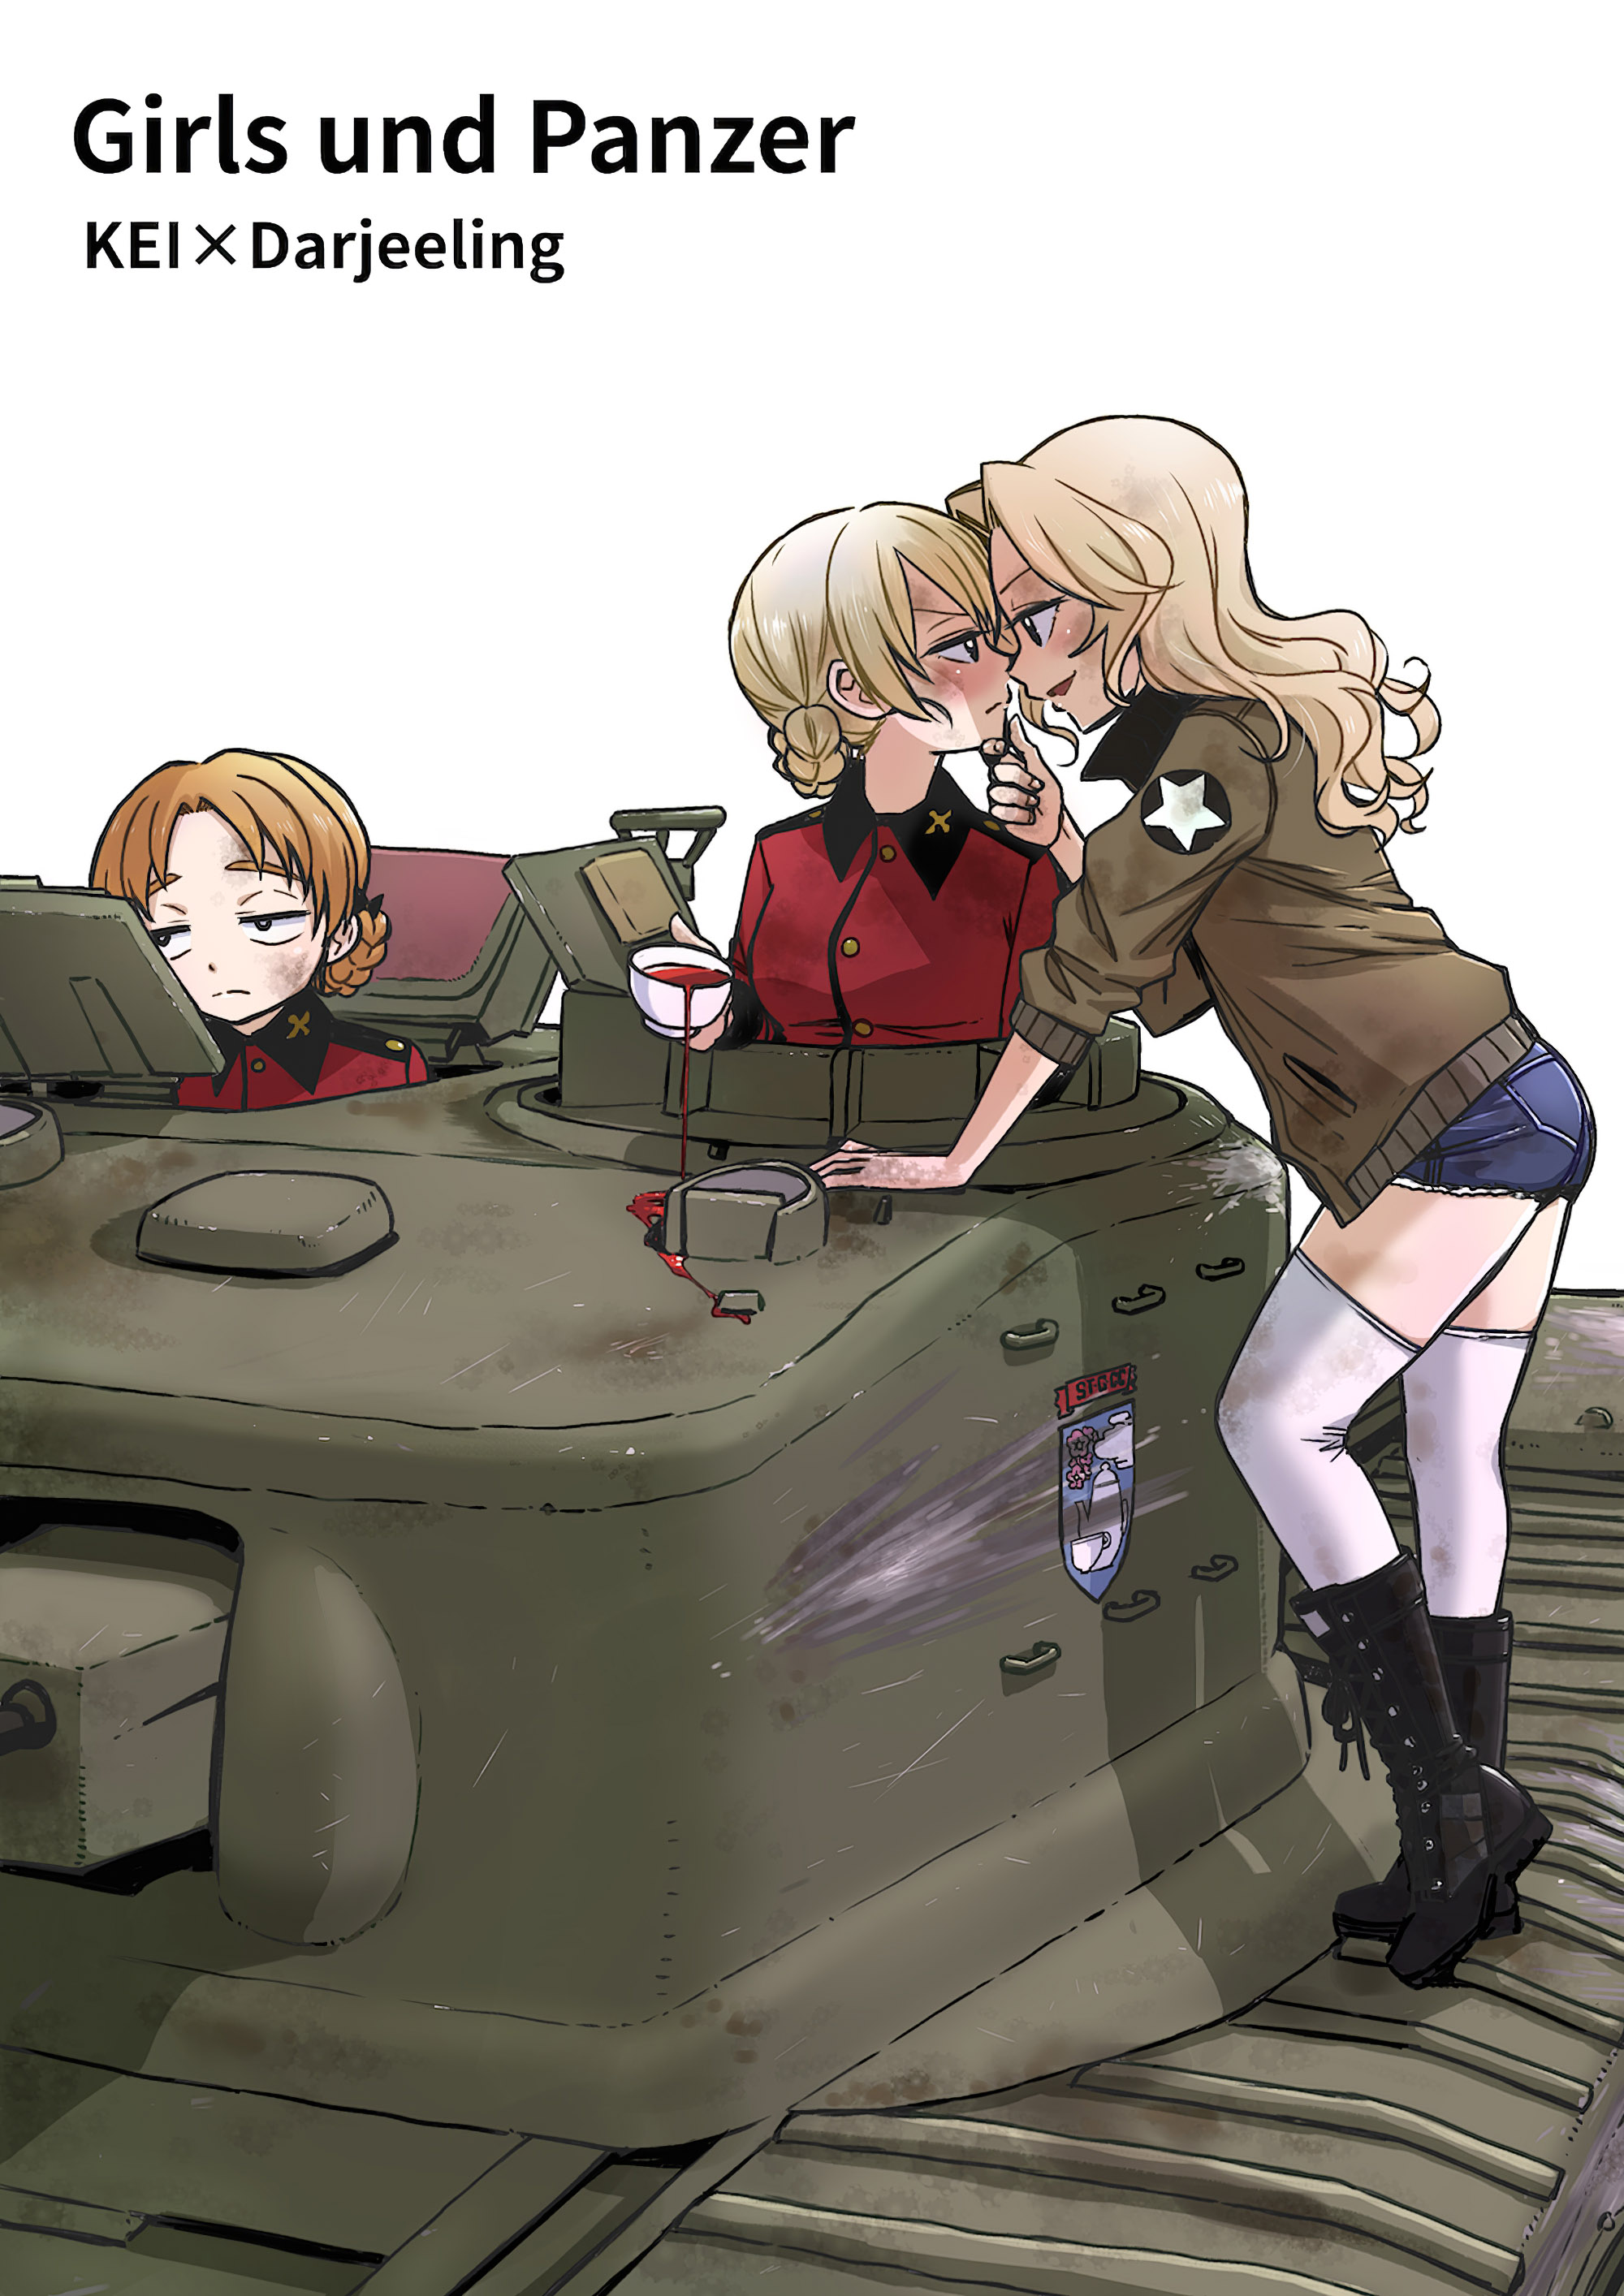 Gta 5 girls und panzer фото 29